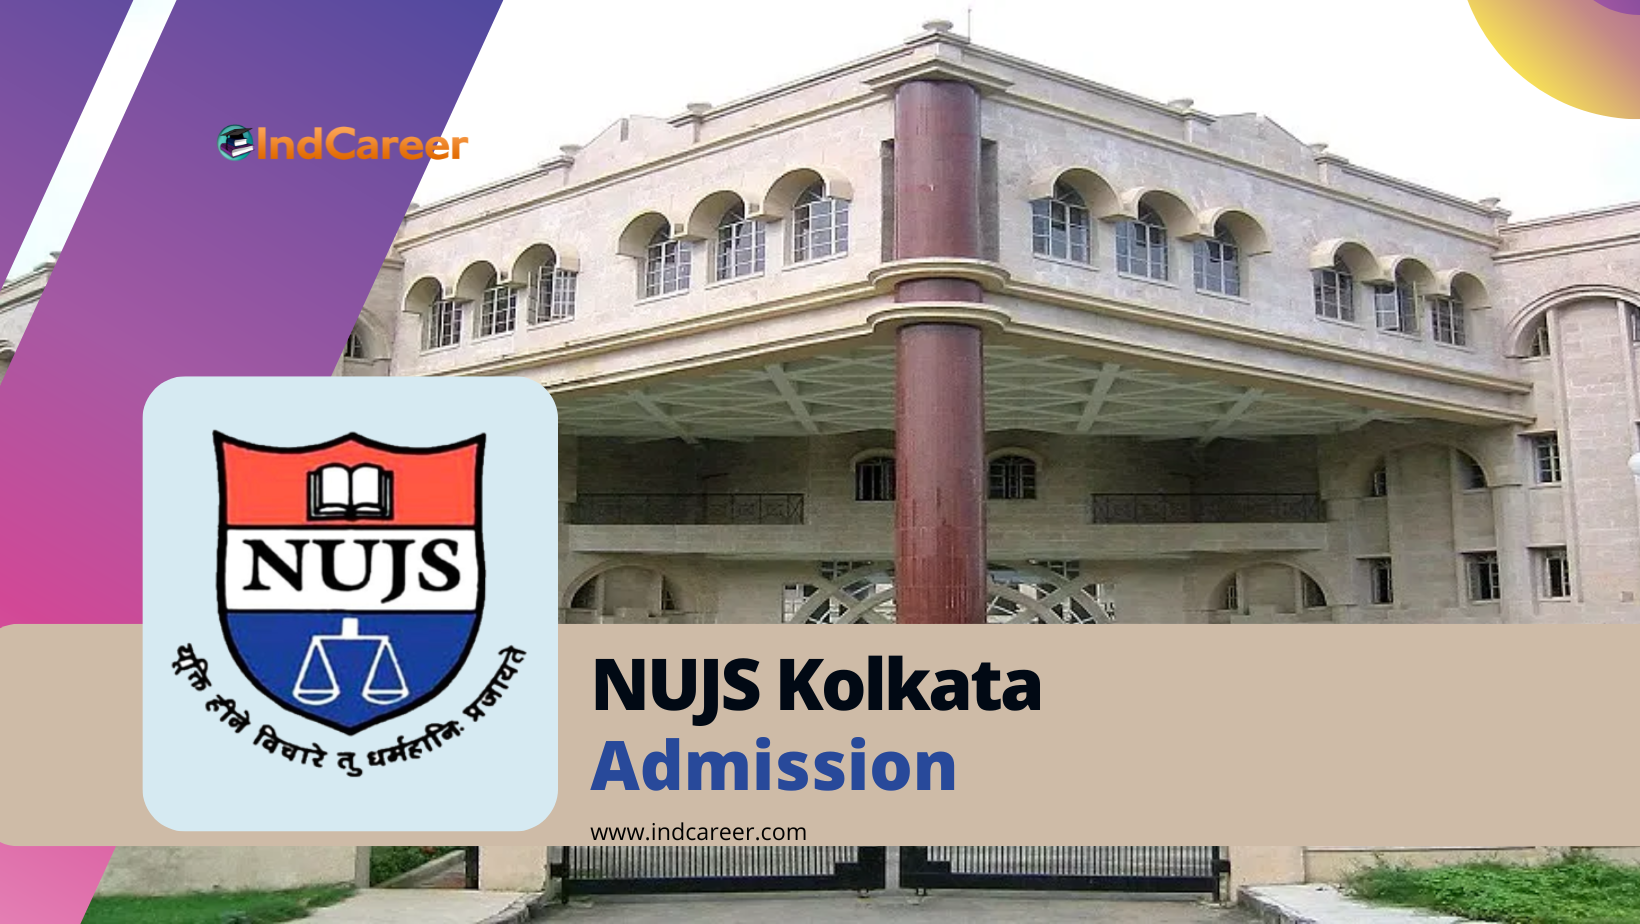 NUJS Kolkata Admission